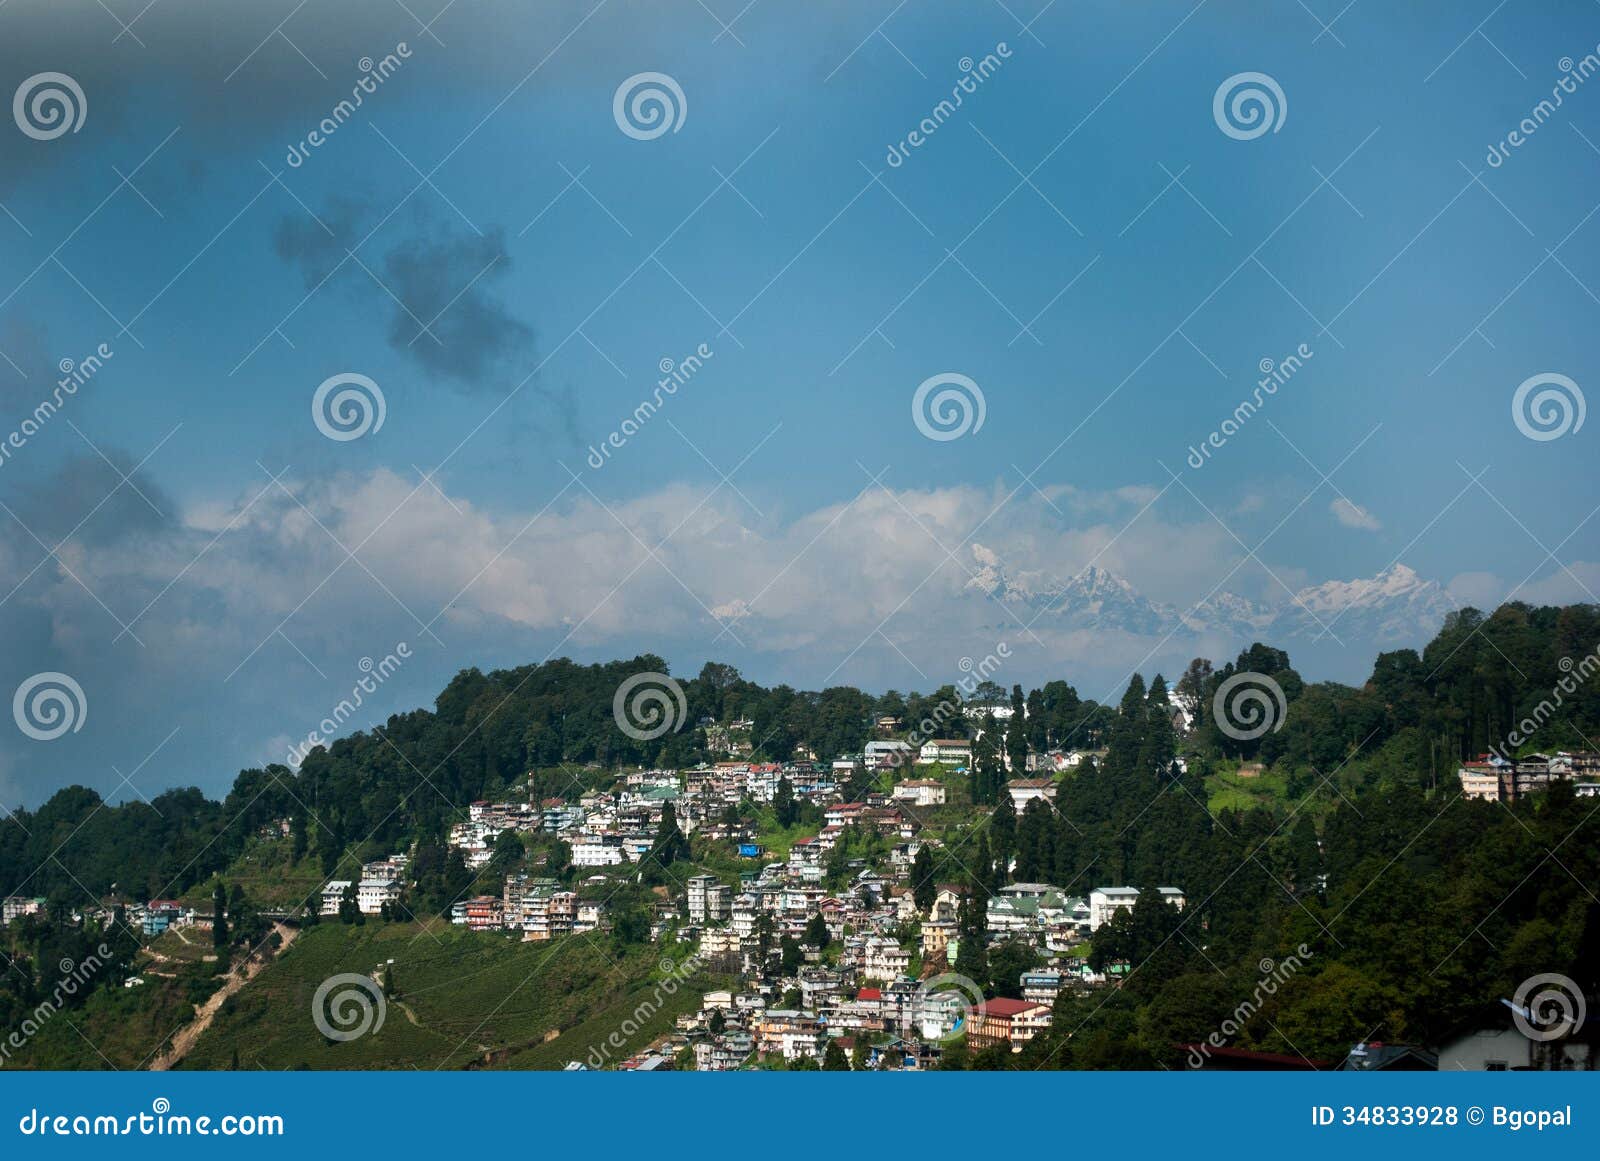 Royalty Free Stock Photos: Darjeeling Landscape